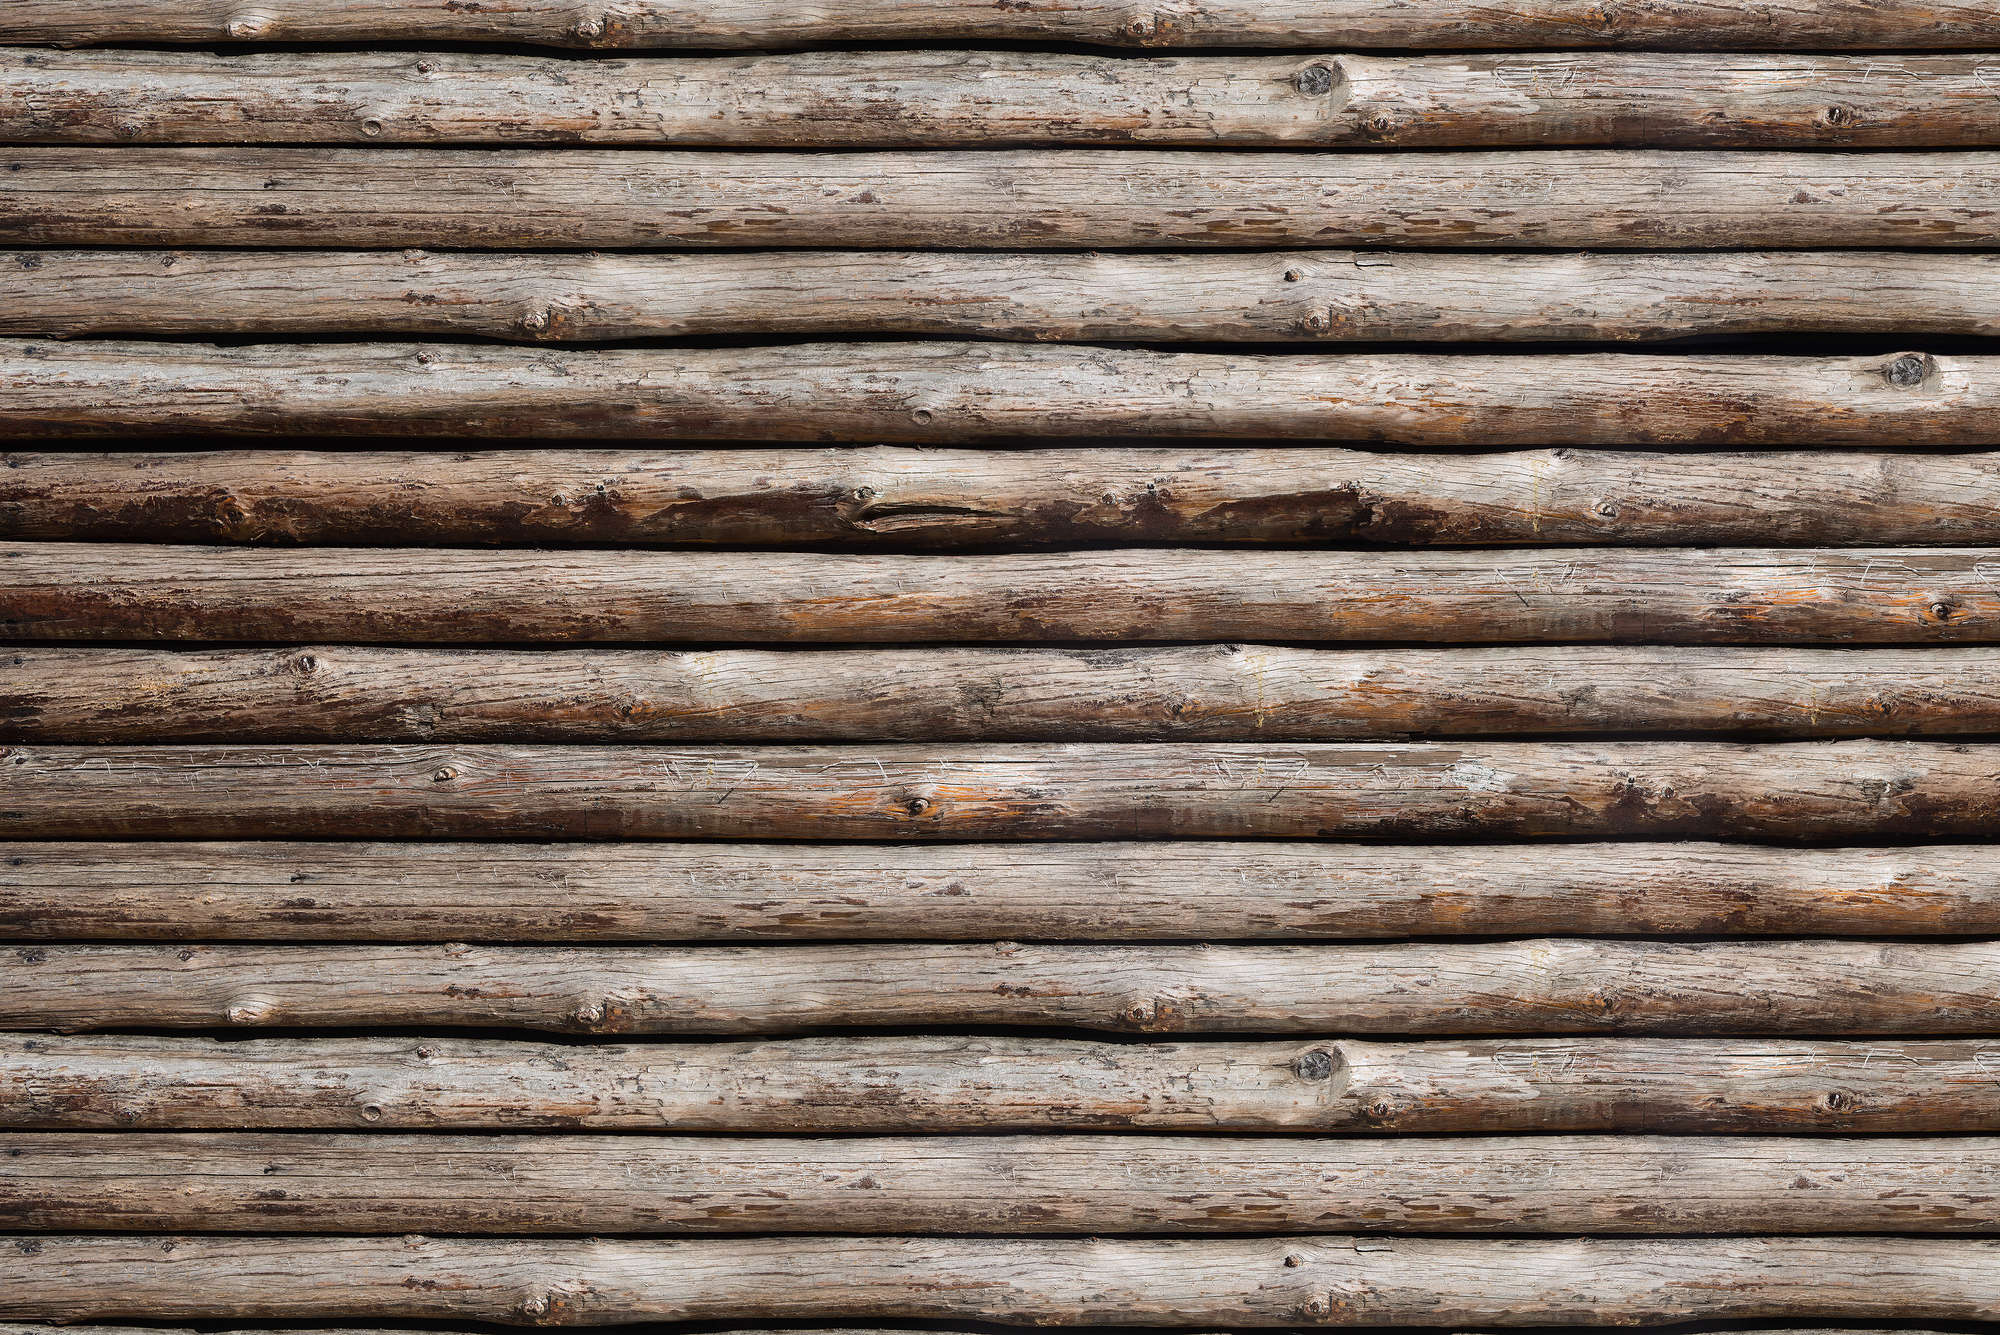             Holz Fototapete Blockhütten Wand auf Matt Glattvlies
        